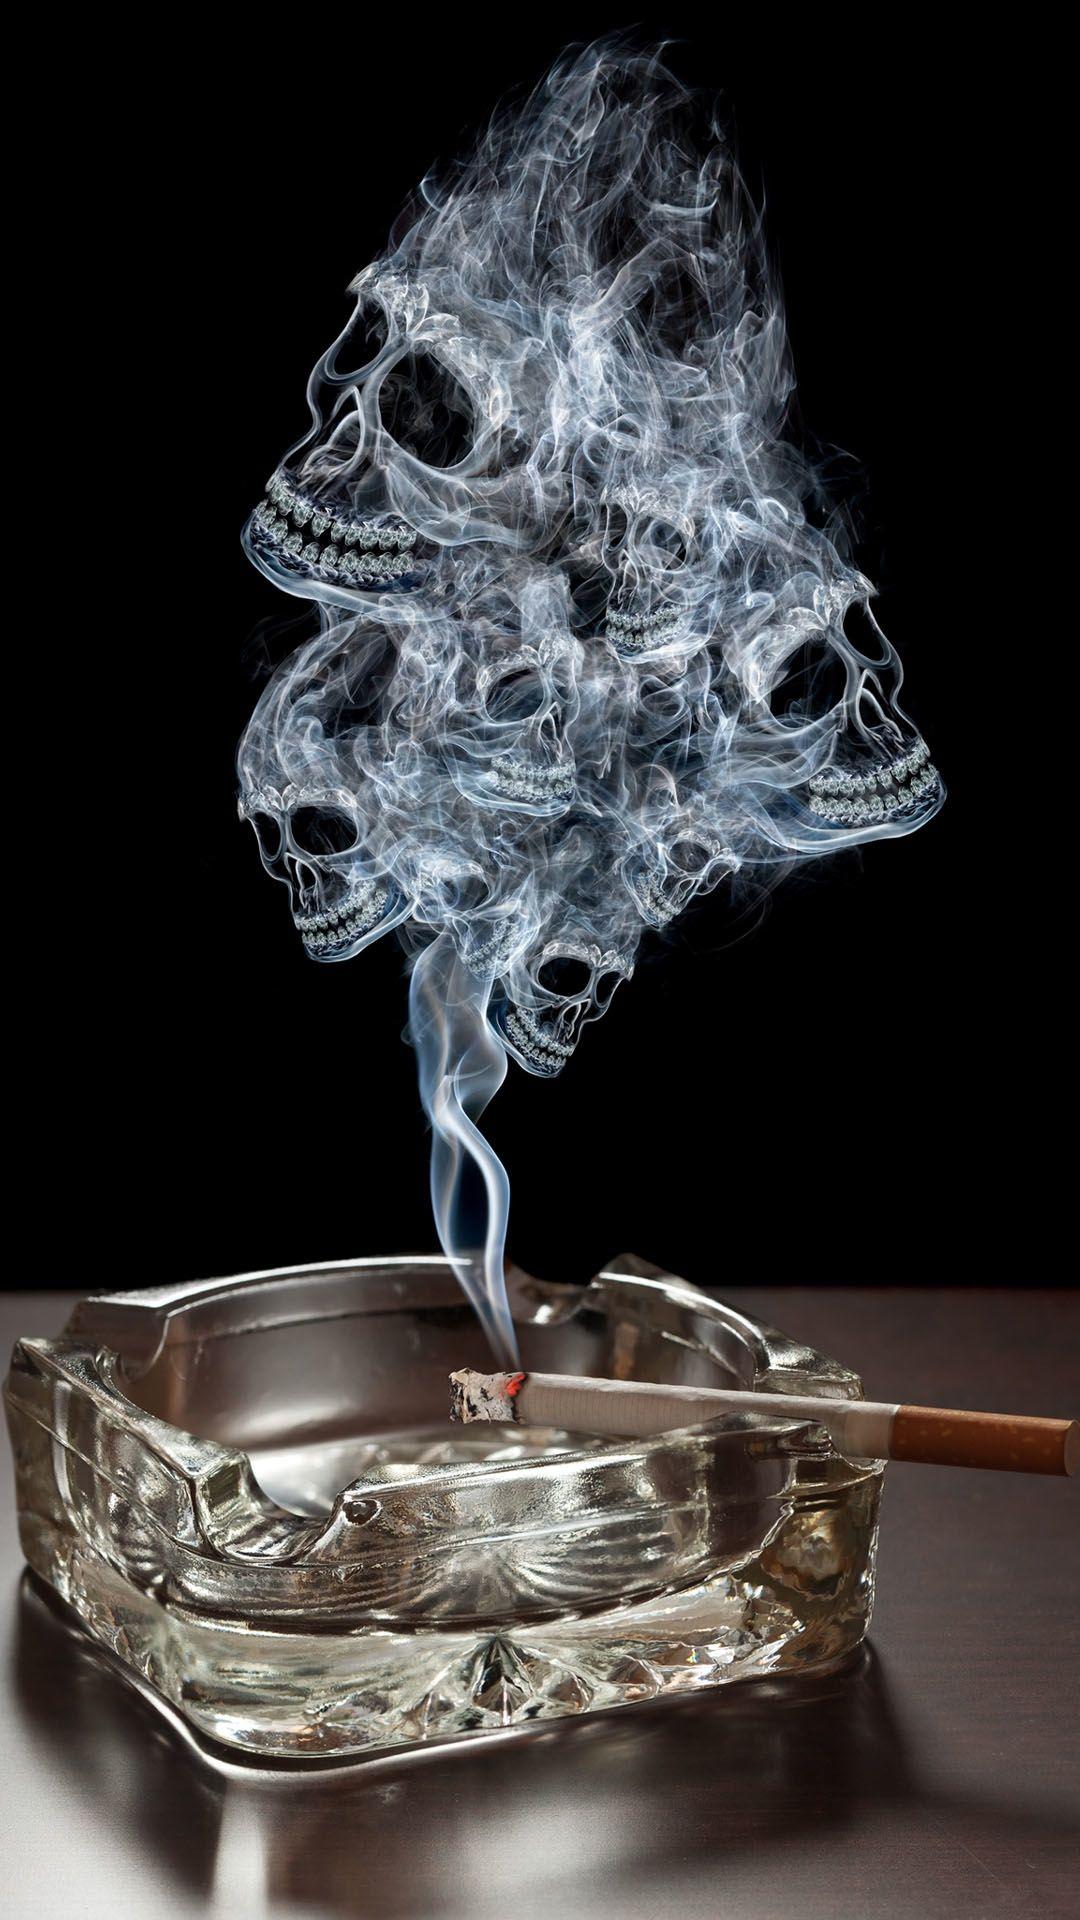 Smoke Skulls Ashtray Burning Cigarette iPhone 6 Plus HD Wallpaper HD